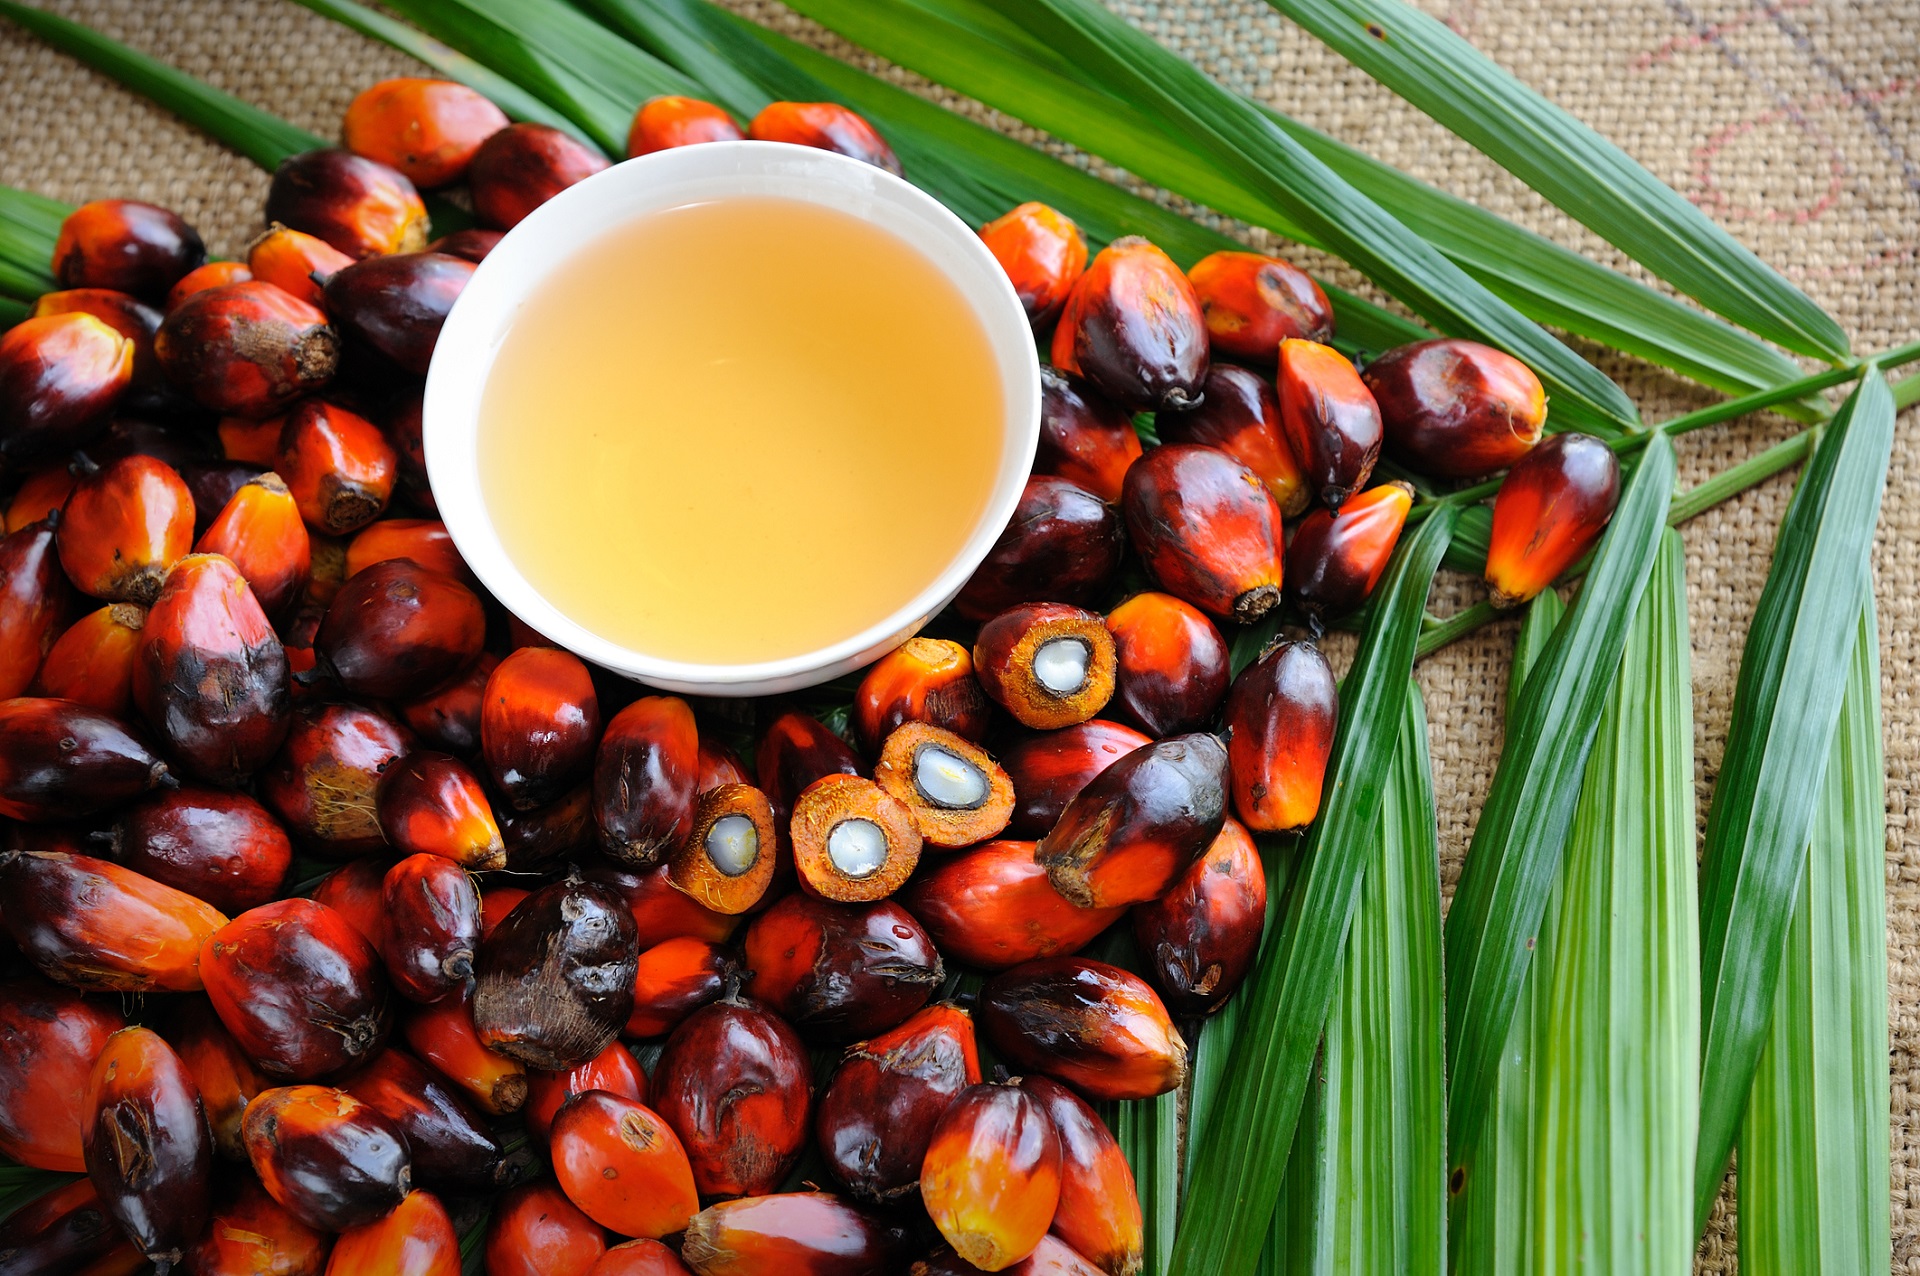 Palm Oil 101